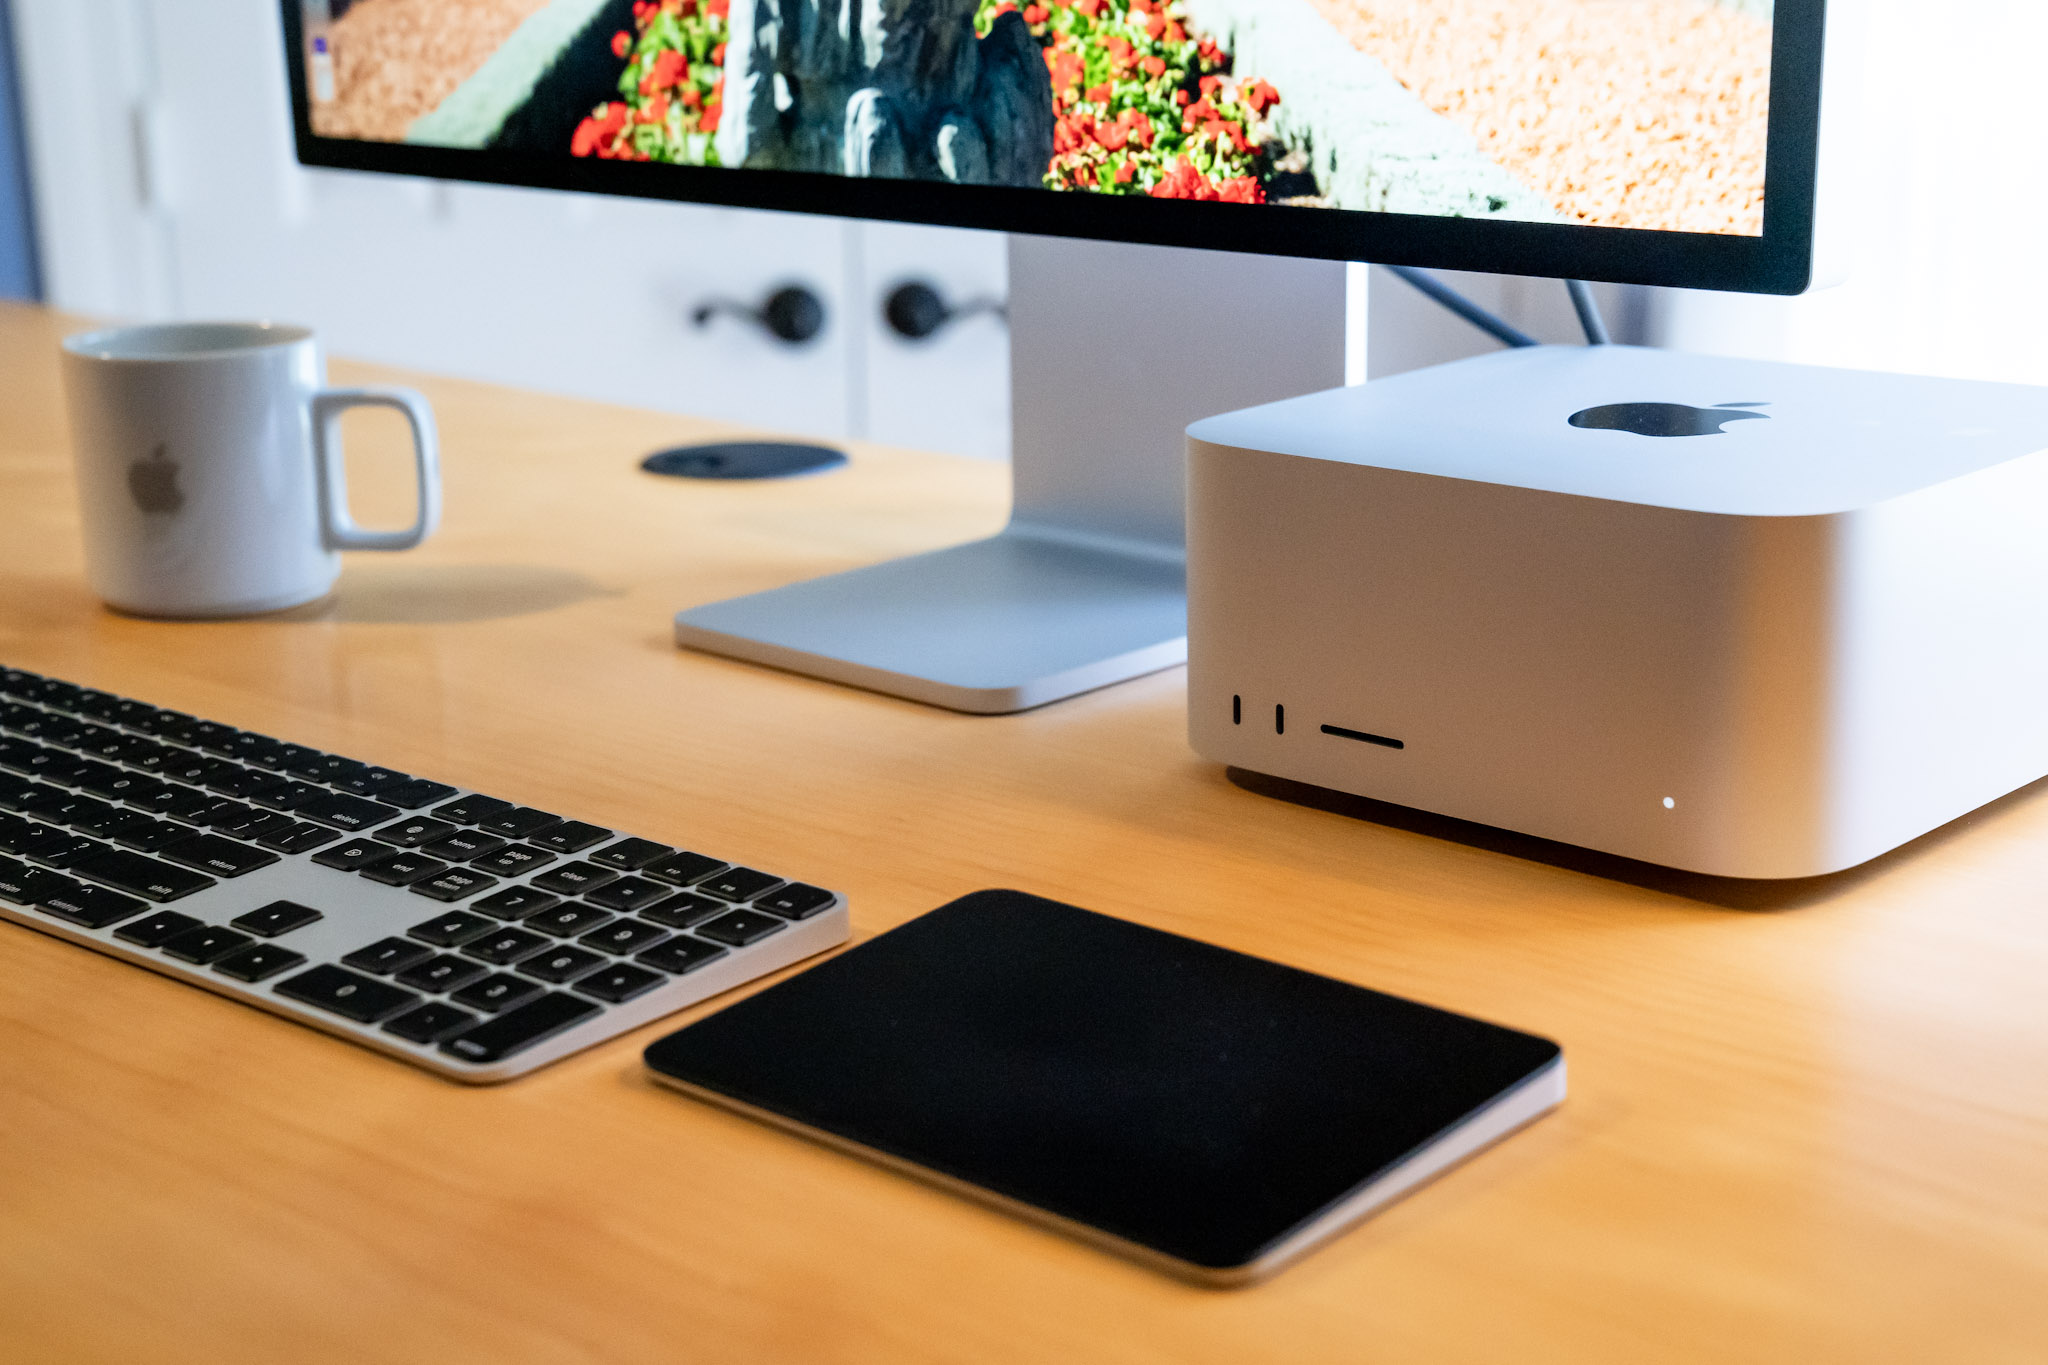 Apple Mac studio(M2 Max) Computer Review - Consumer Reports